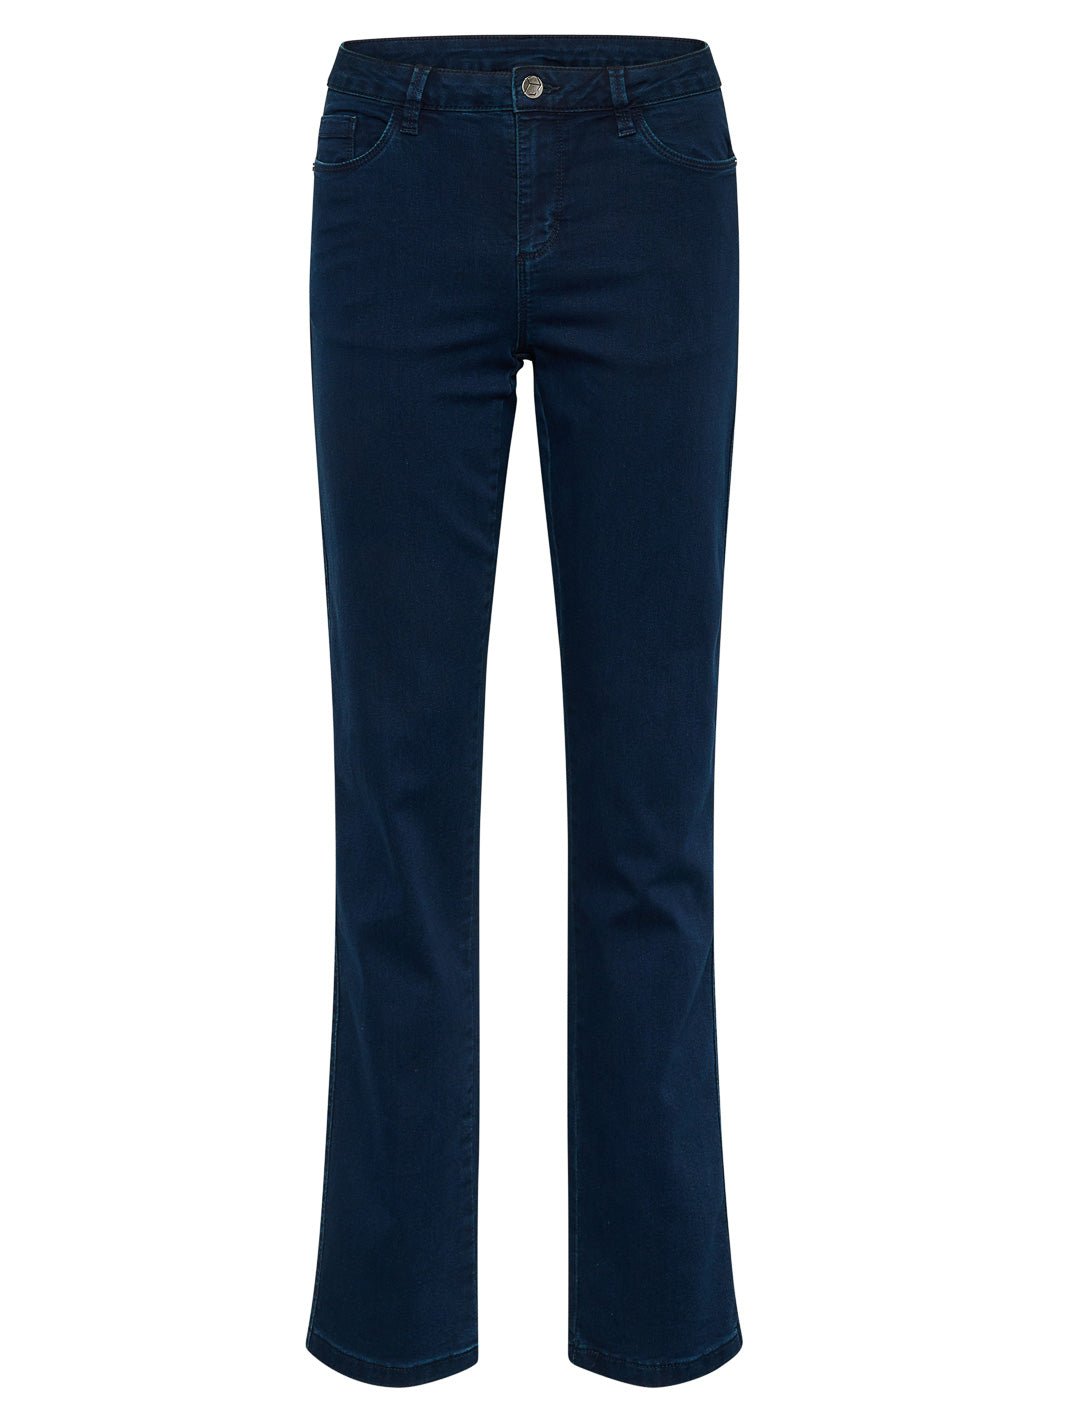 Kaffe KAvicky straight jeans I dark blue denim - Online-Mode